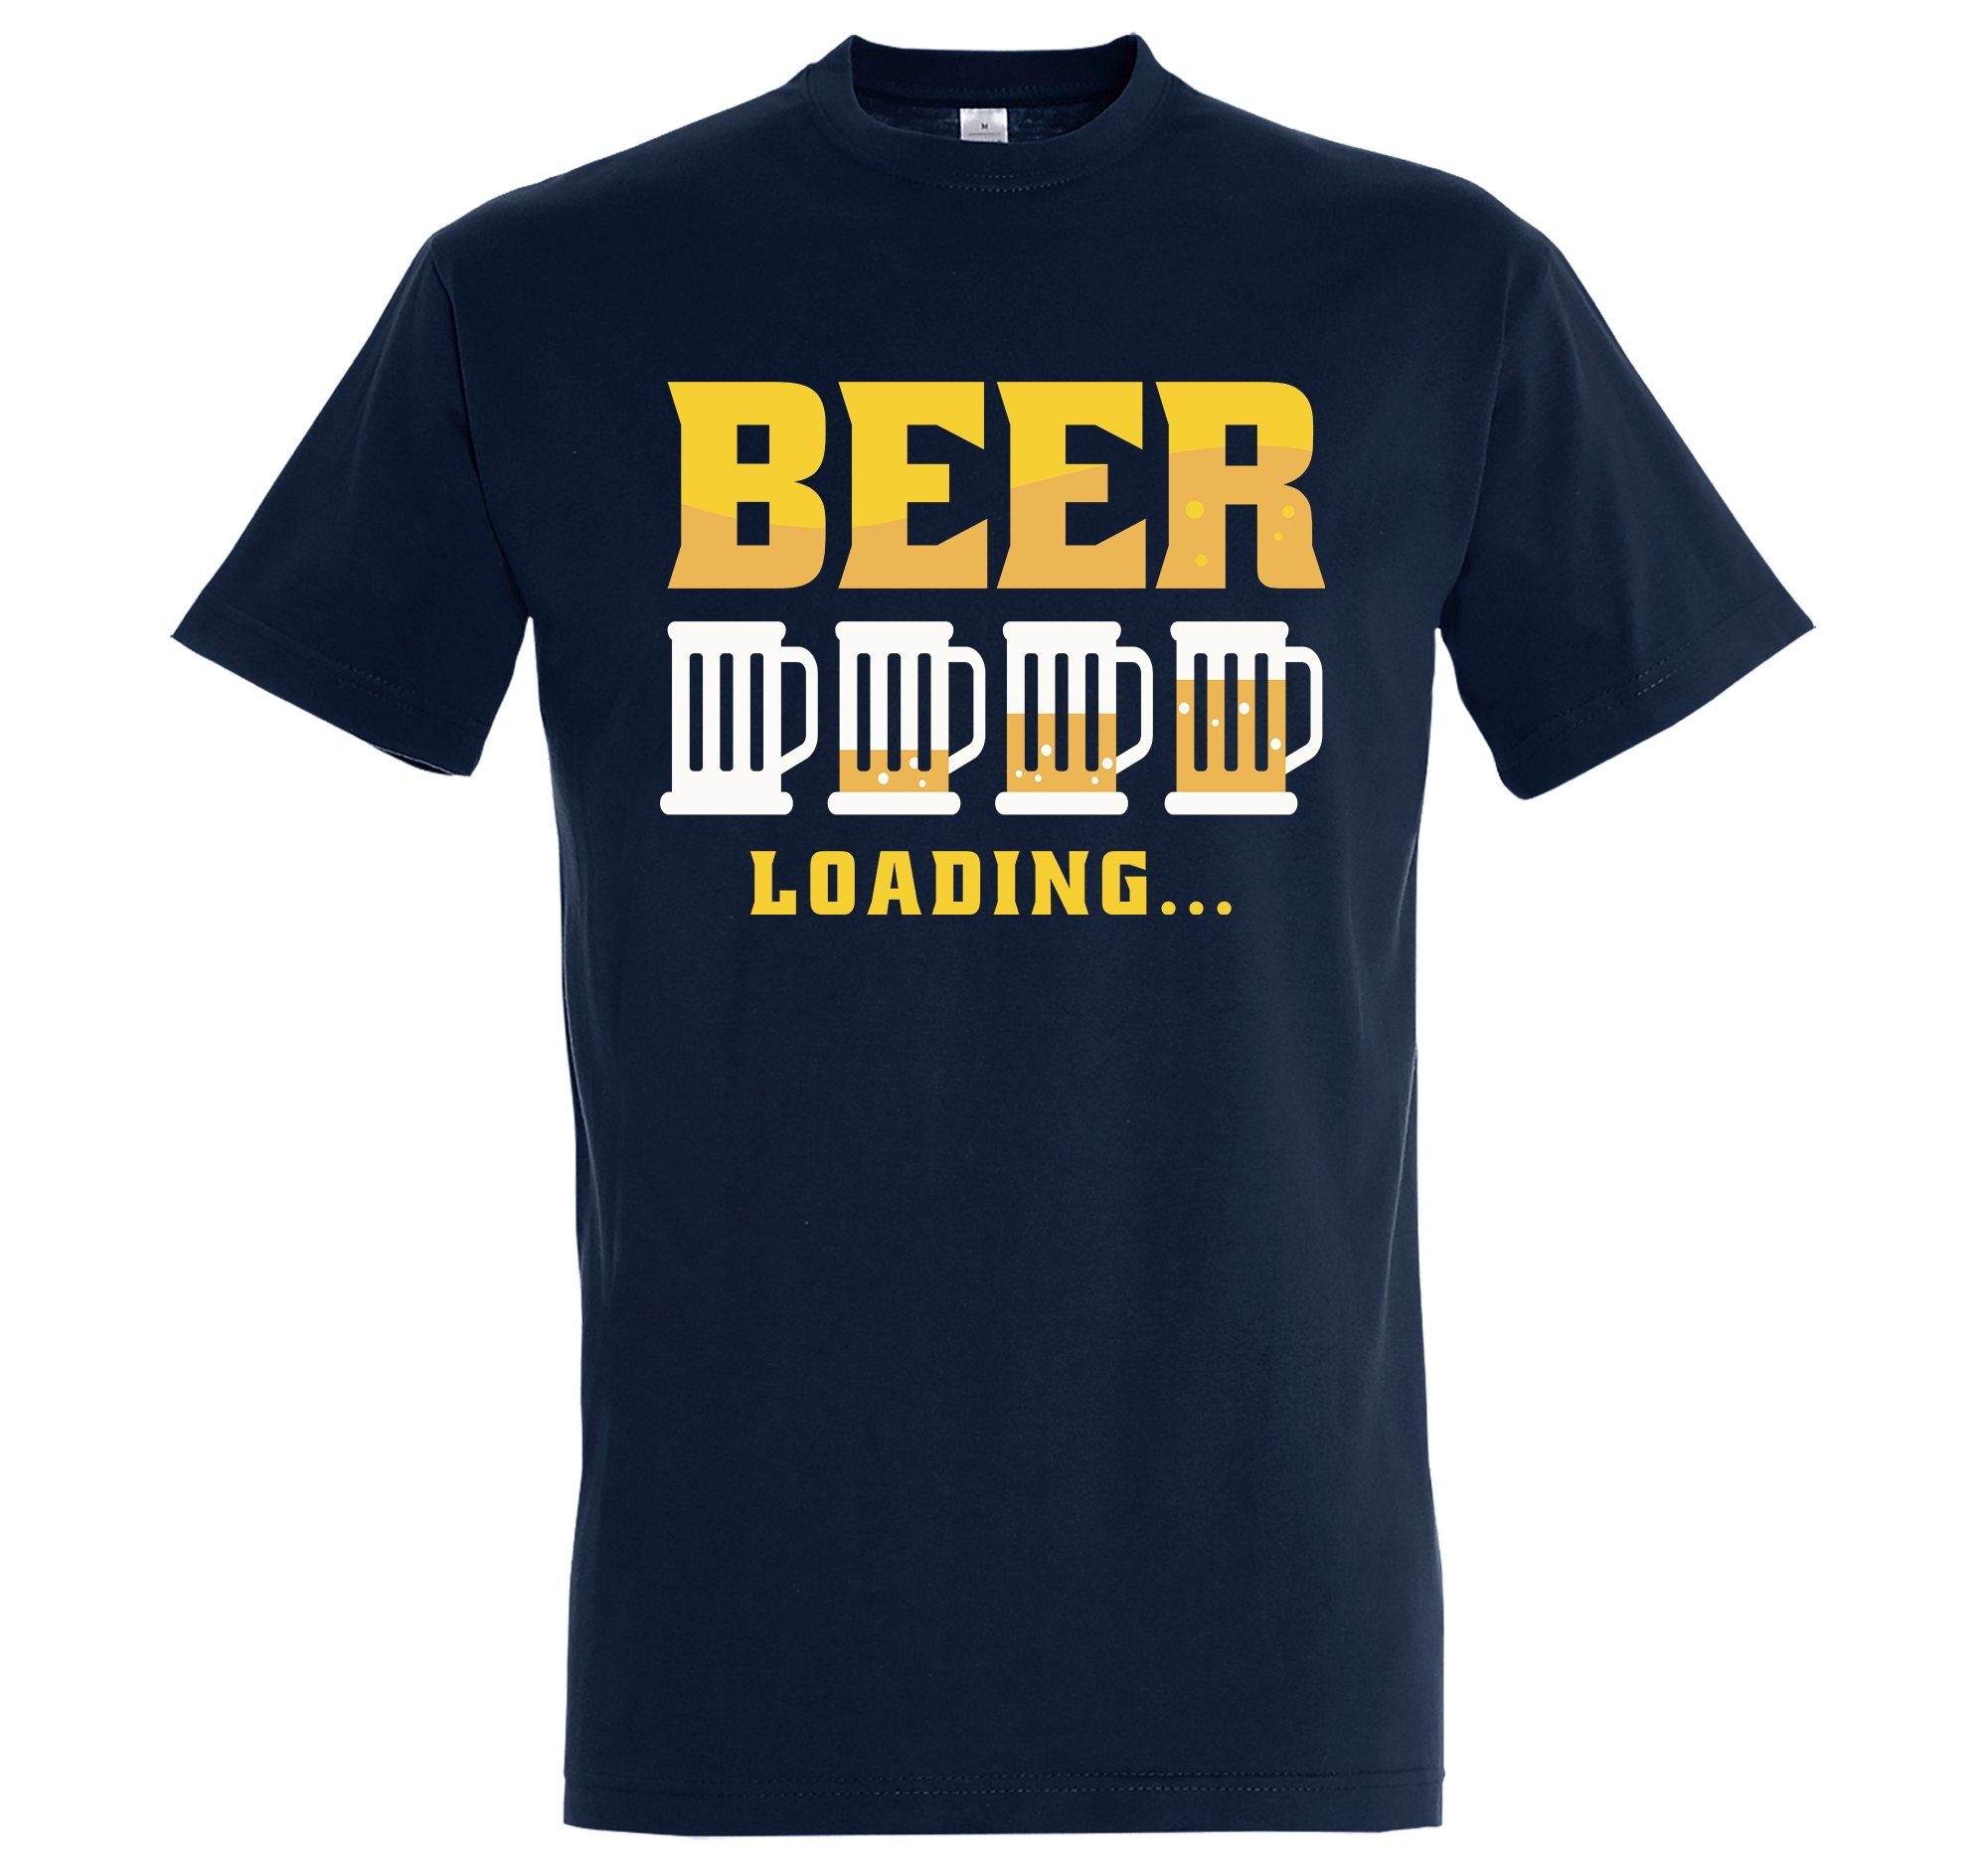 Frontprint Navyblau mit Designz trendigem Beer Shirt Herren T-Shirt Loading Youth